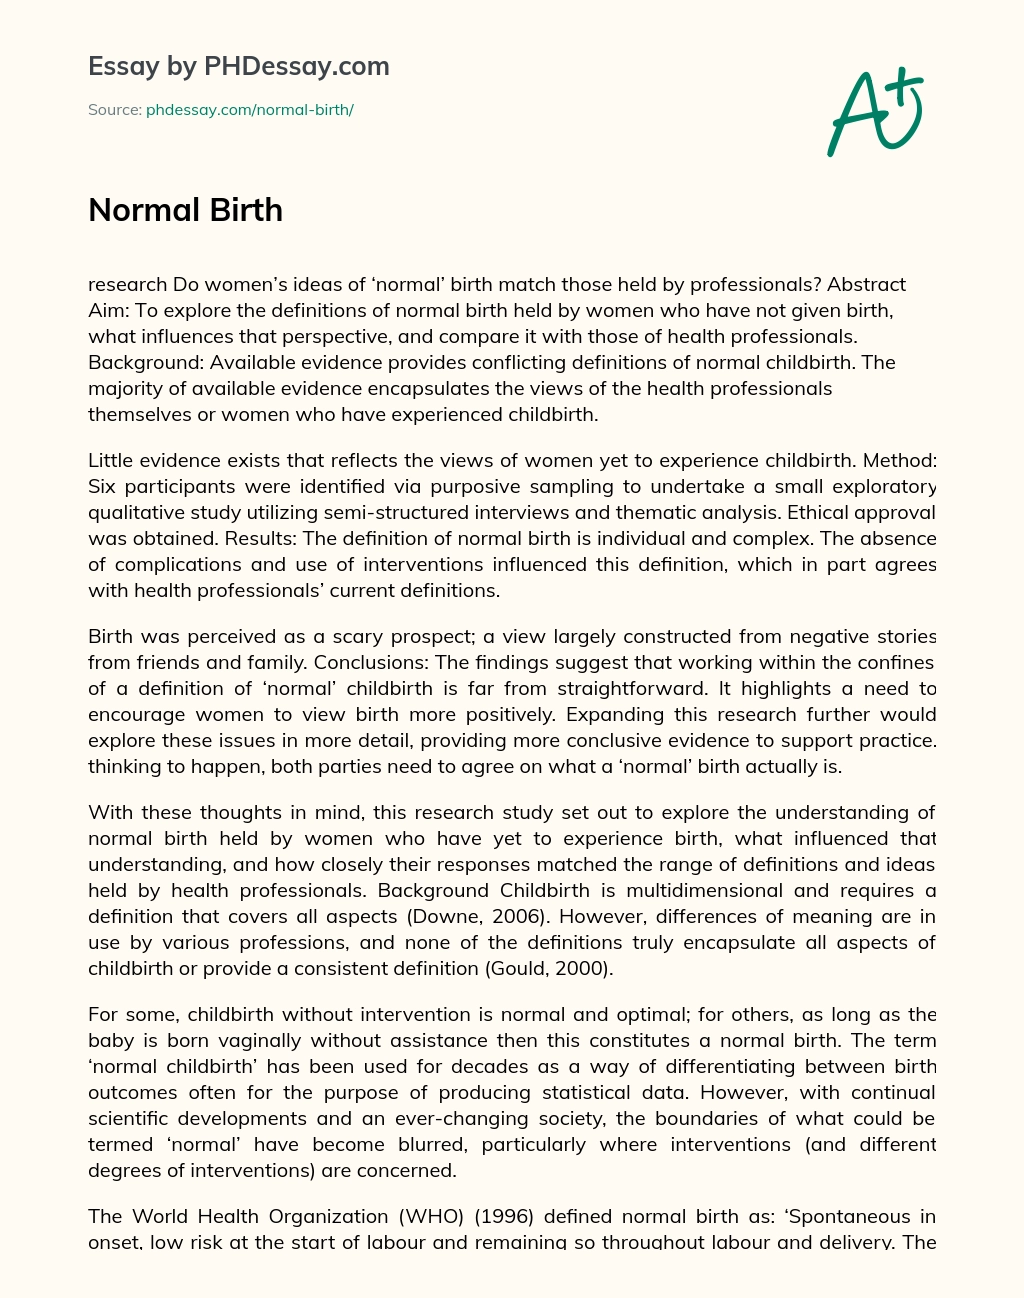 Normal Birth essay